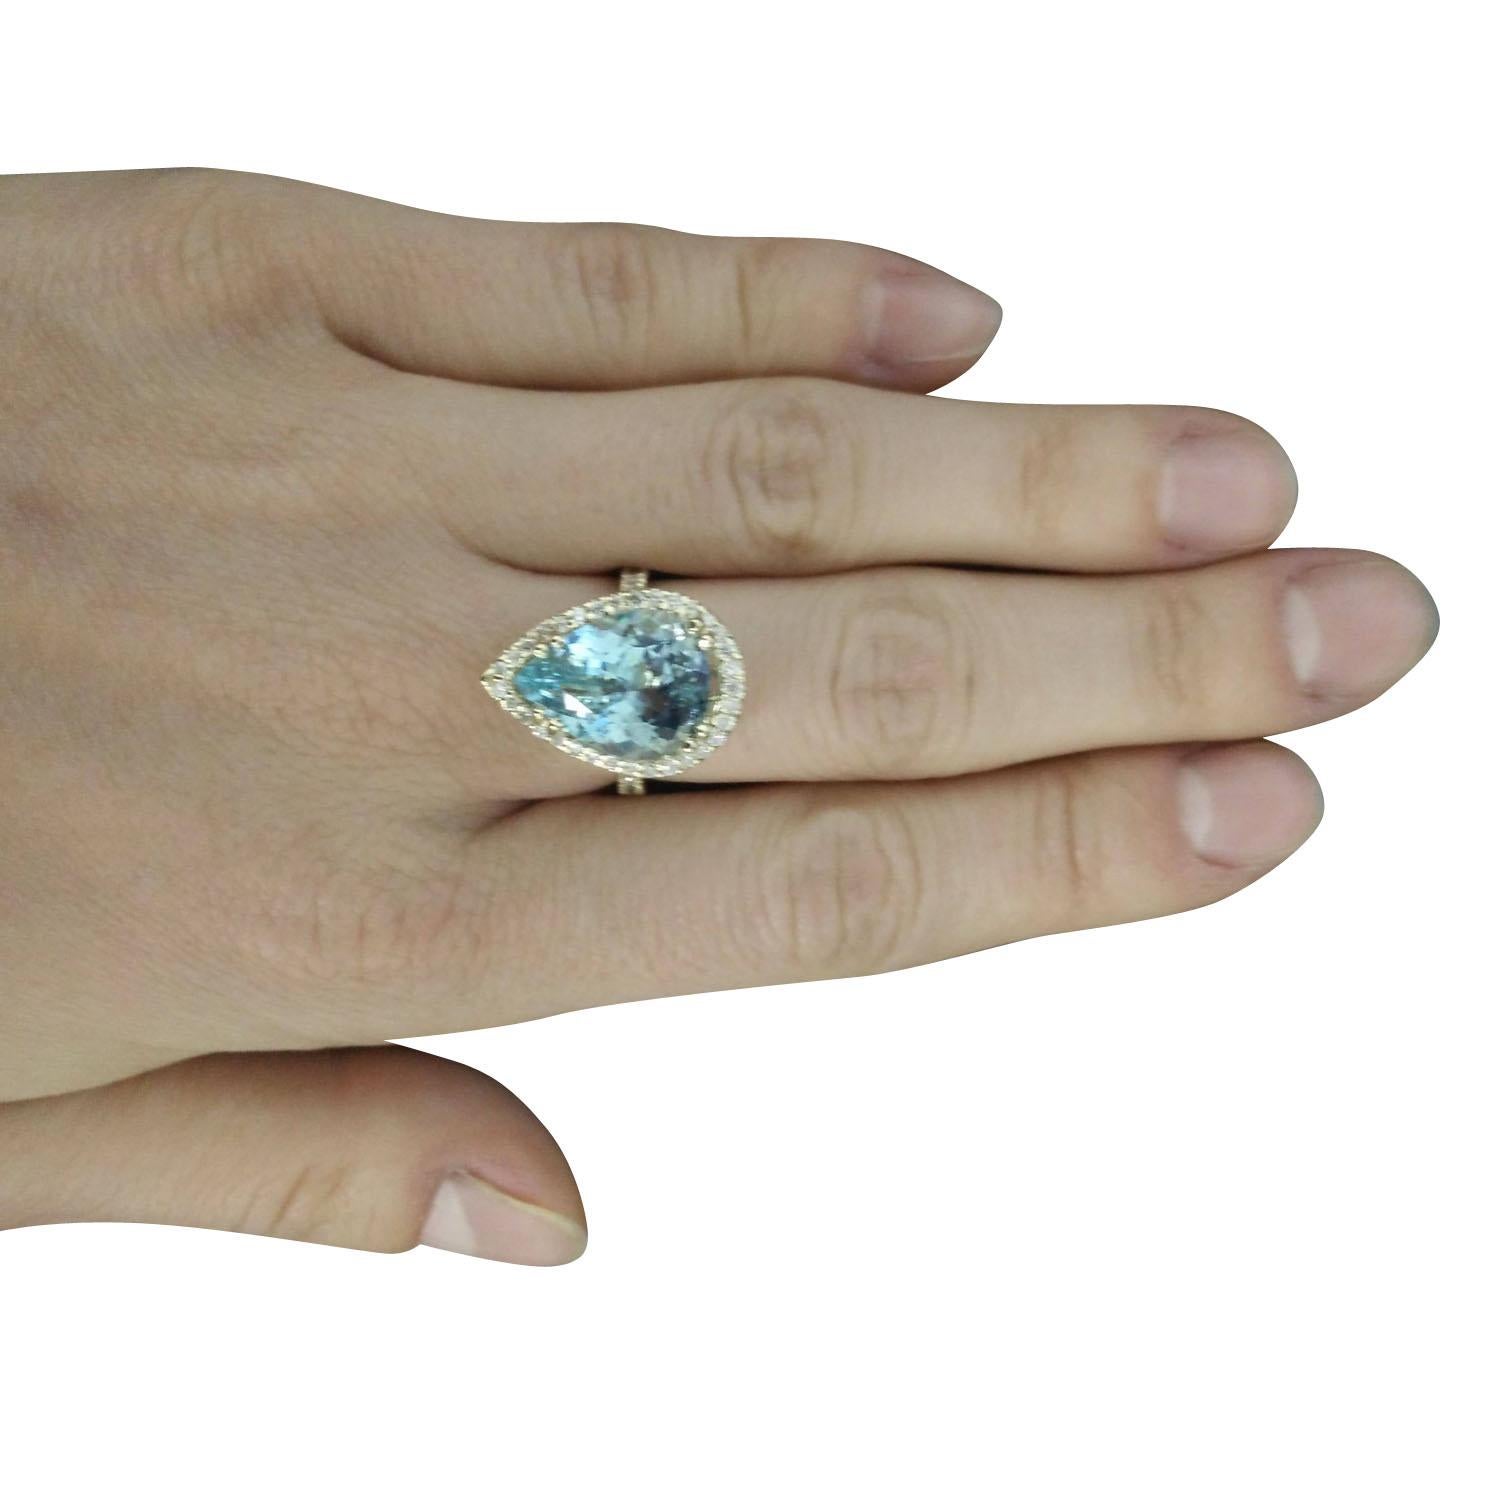 7.50 Carat Natural Aquamarine 14 Karat Solid Yellow Gold Diamond Ring
Stamped: 14K 
Ring Size: 7
Total Ring Weight: 5.8 Grams 
Aquamarine Weight: 6.75 Carat (15.00x12.00 Millimeter) 
Diamond Weight: 0.75 Carat (F-G Color, VS2-SI1 Clarity) 
Quantity: